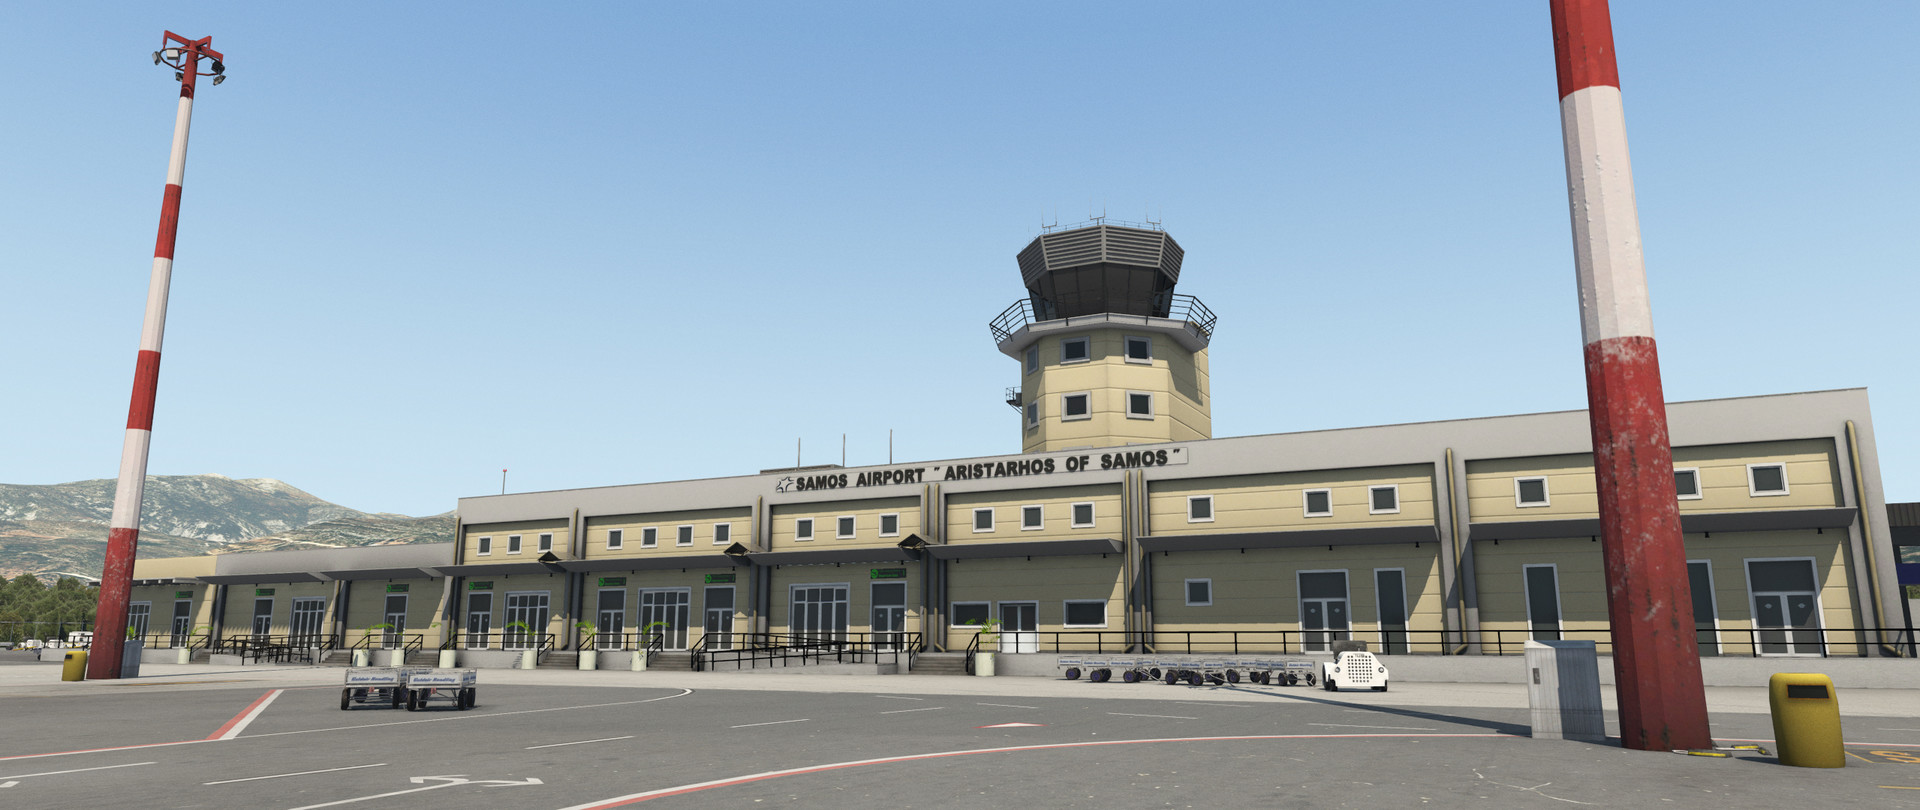 X-Plane 11 - Add-on: Skyline Simulations - LGSM - Samos Airport Featured Screenshot #1